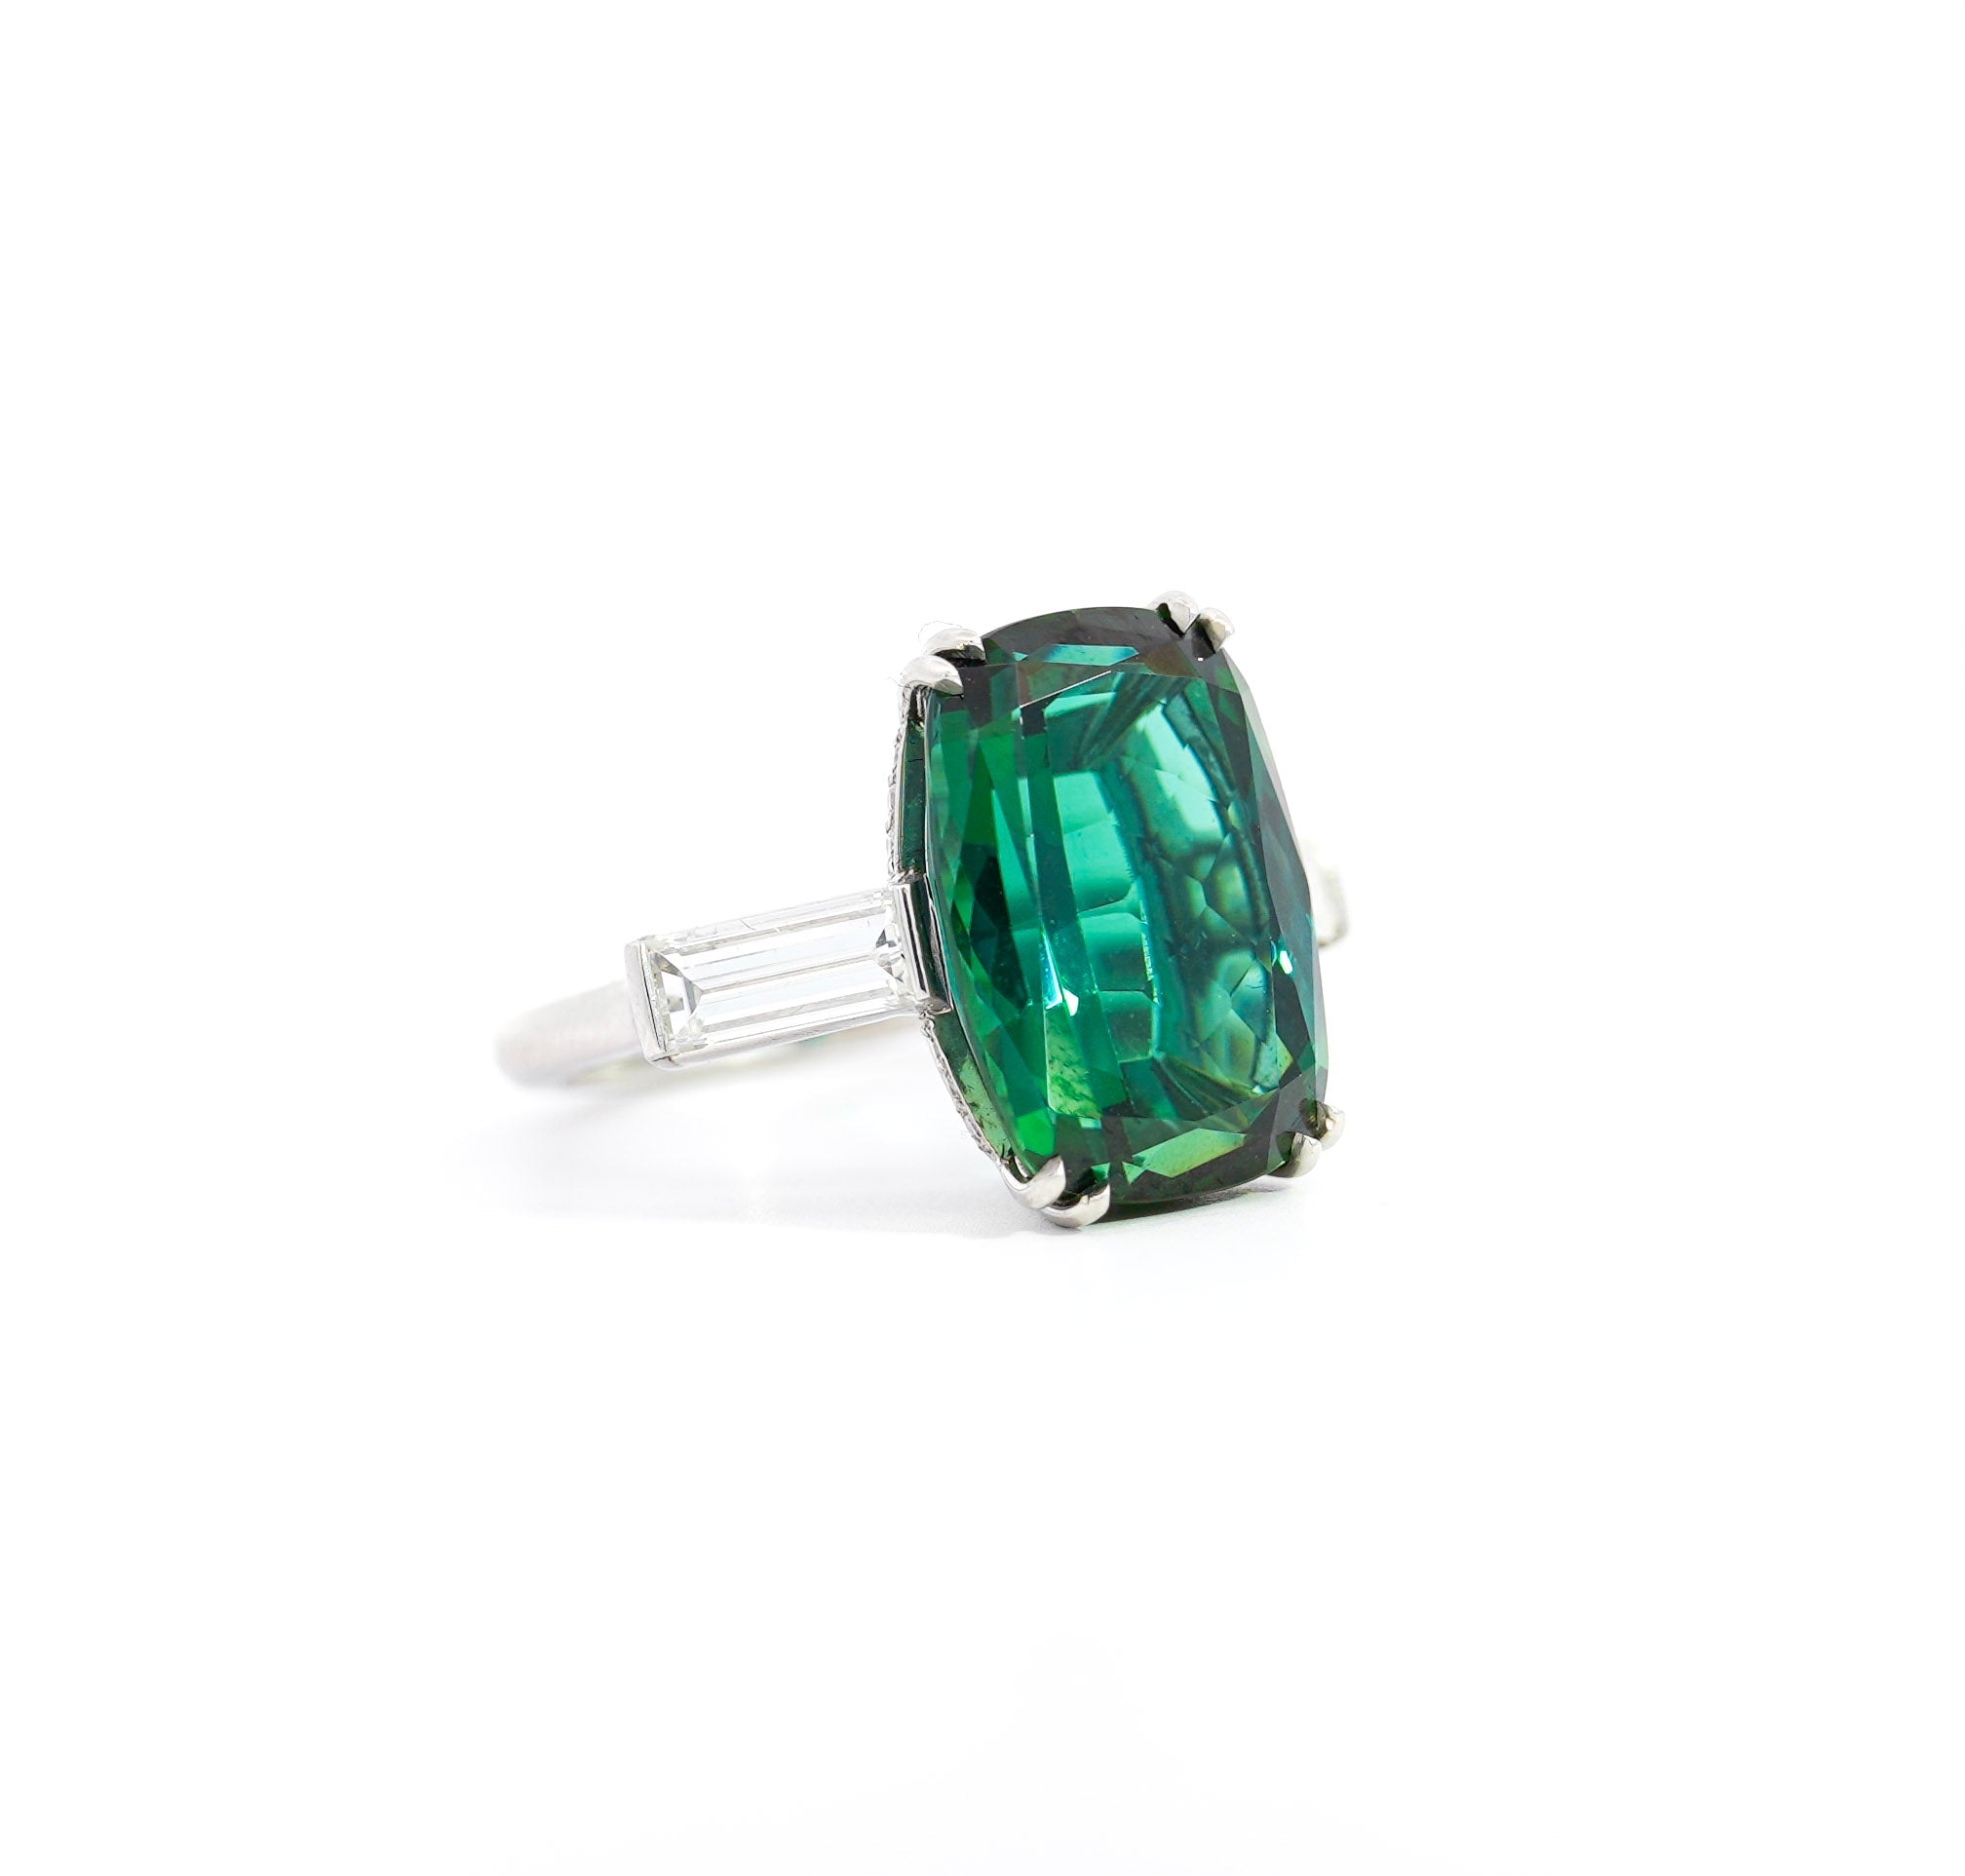 12_68-Carat-Zoisite-Green-Tanzanite-Diamond-Ring-in-Platinum-950-IGI-Certified-Rings-2.jpg